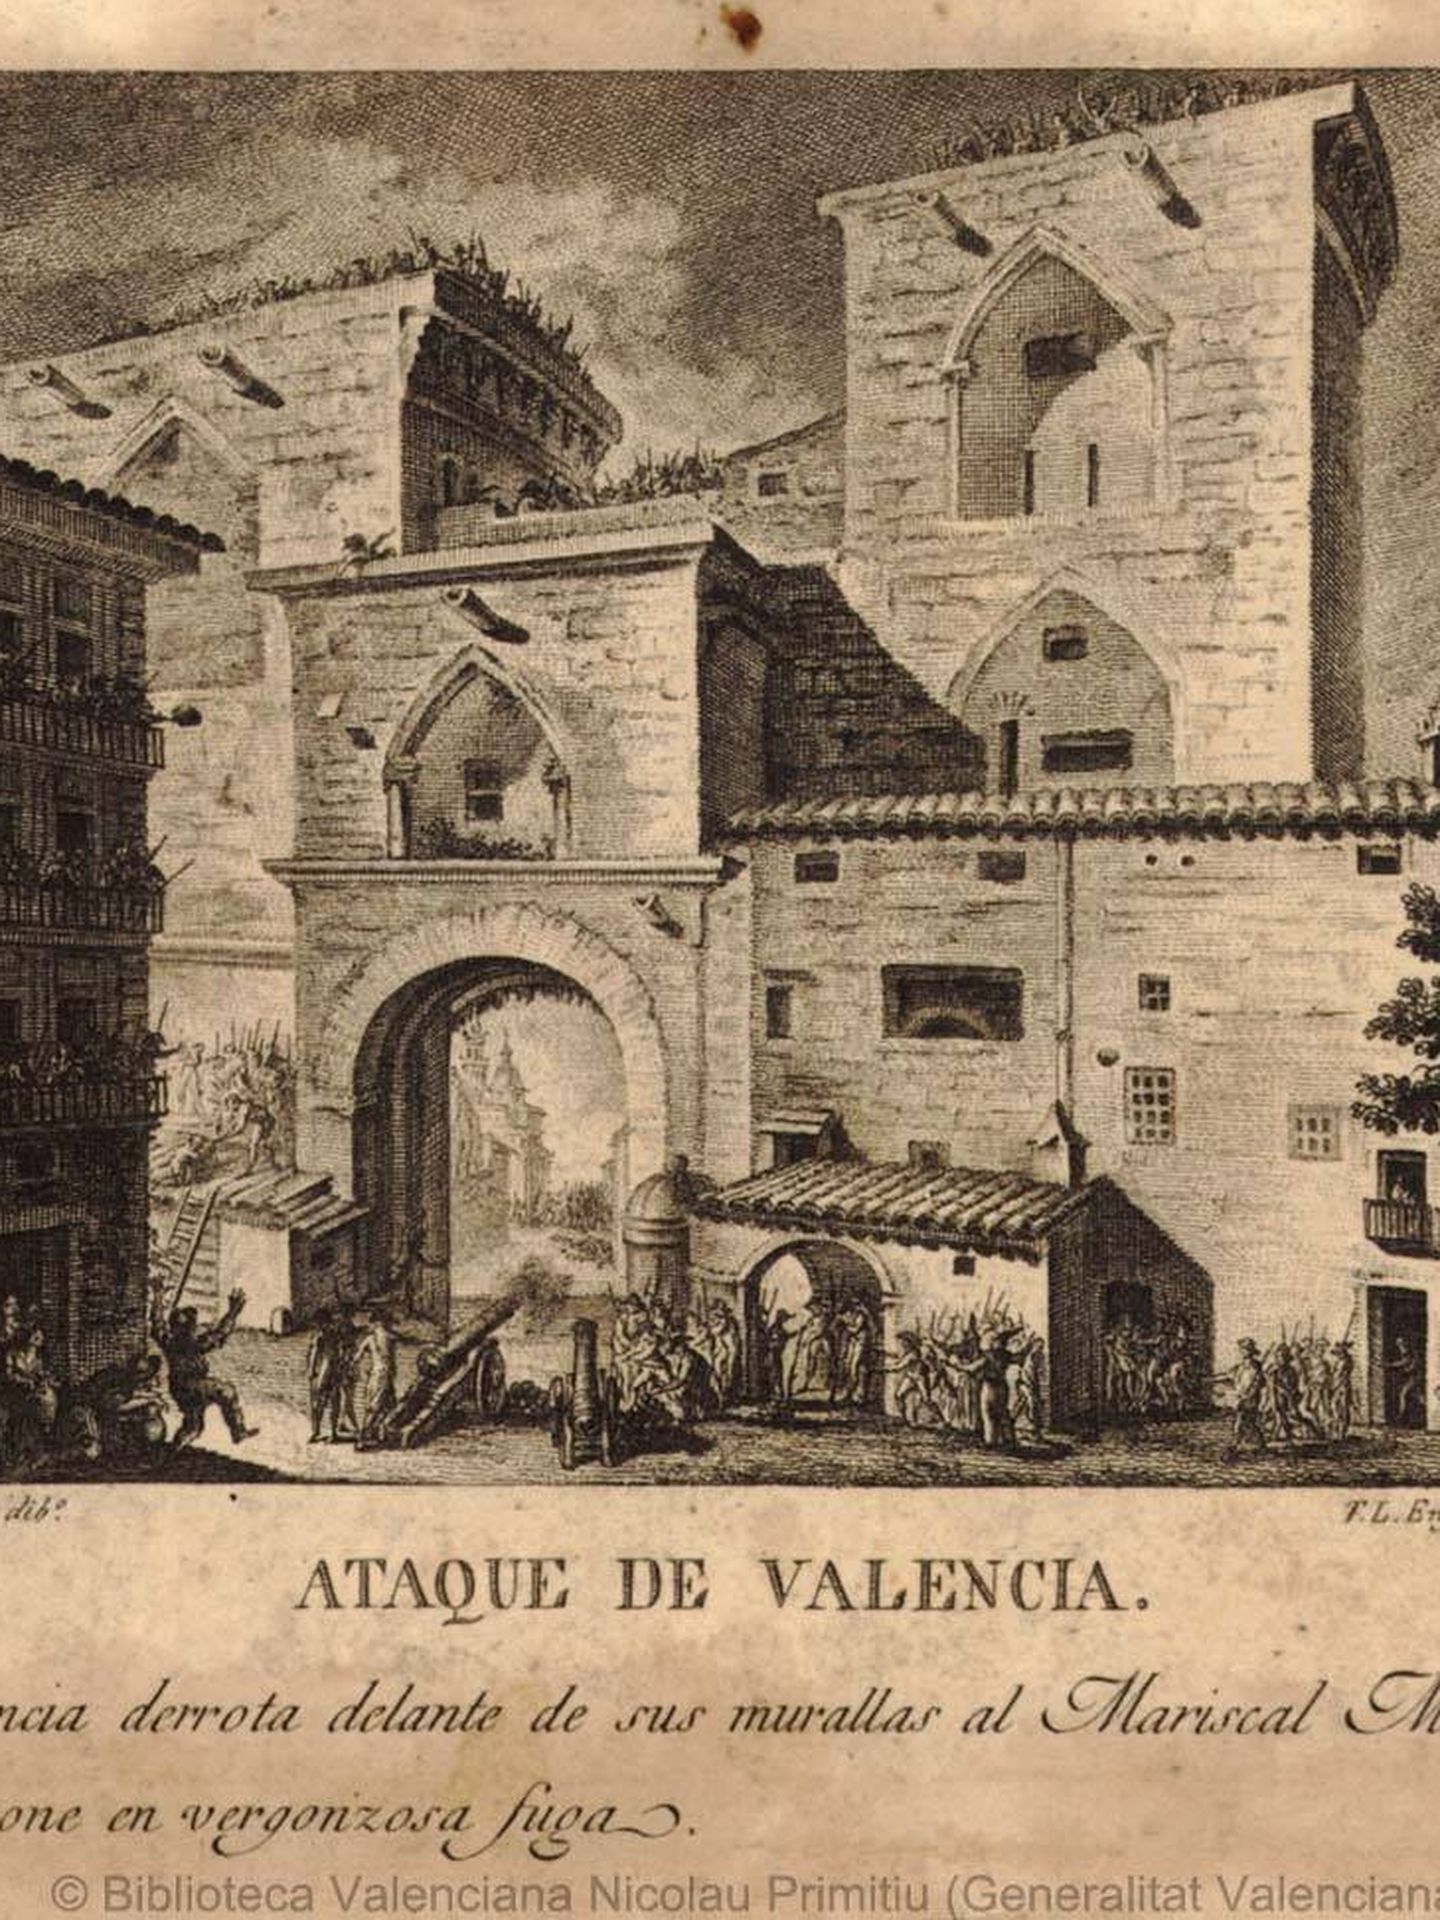 Defensa de Valencia desde Torres de Quart. (Biblioteca Valenciana)